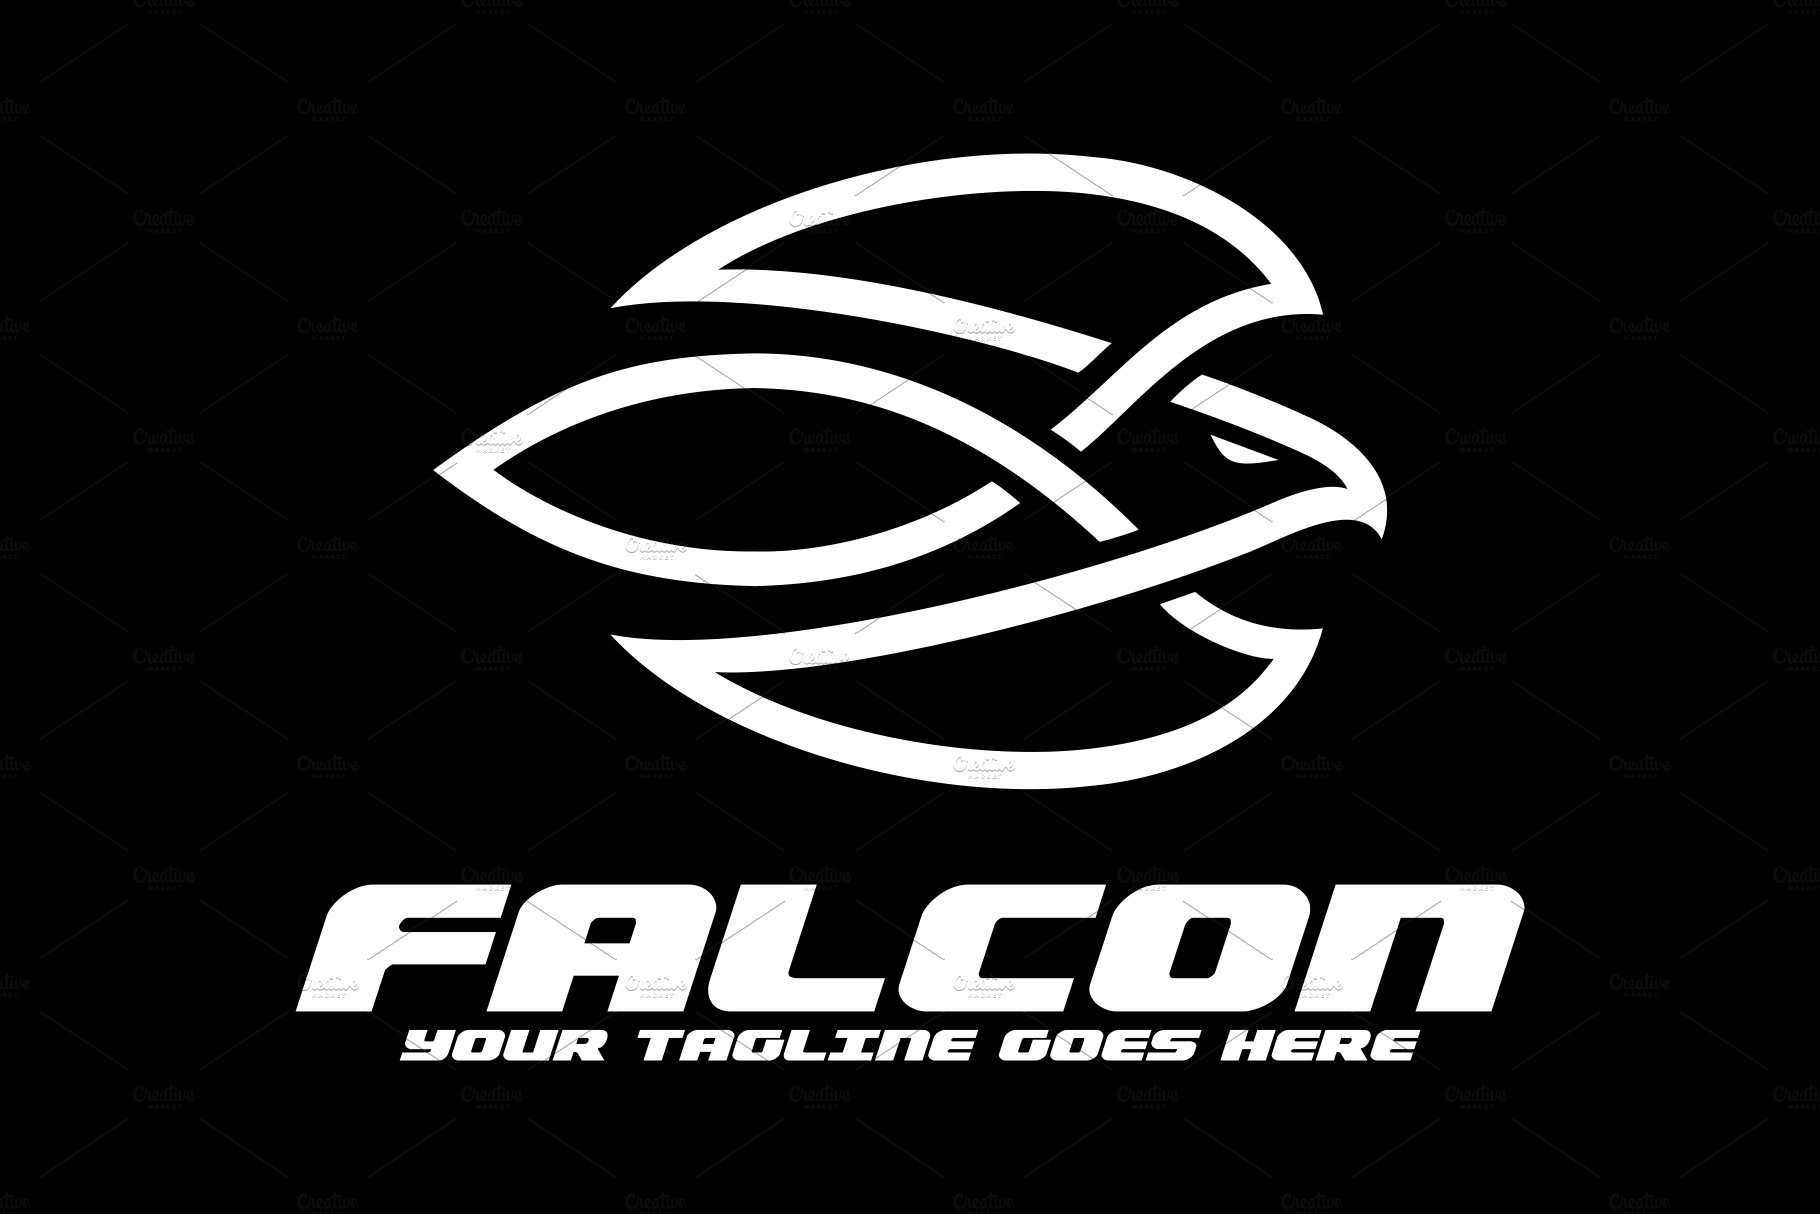 Falcon Logo preview image.